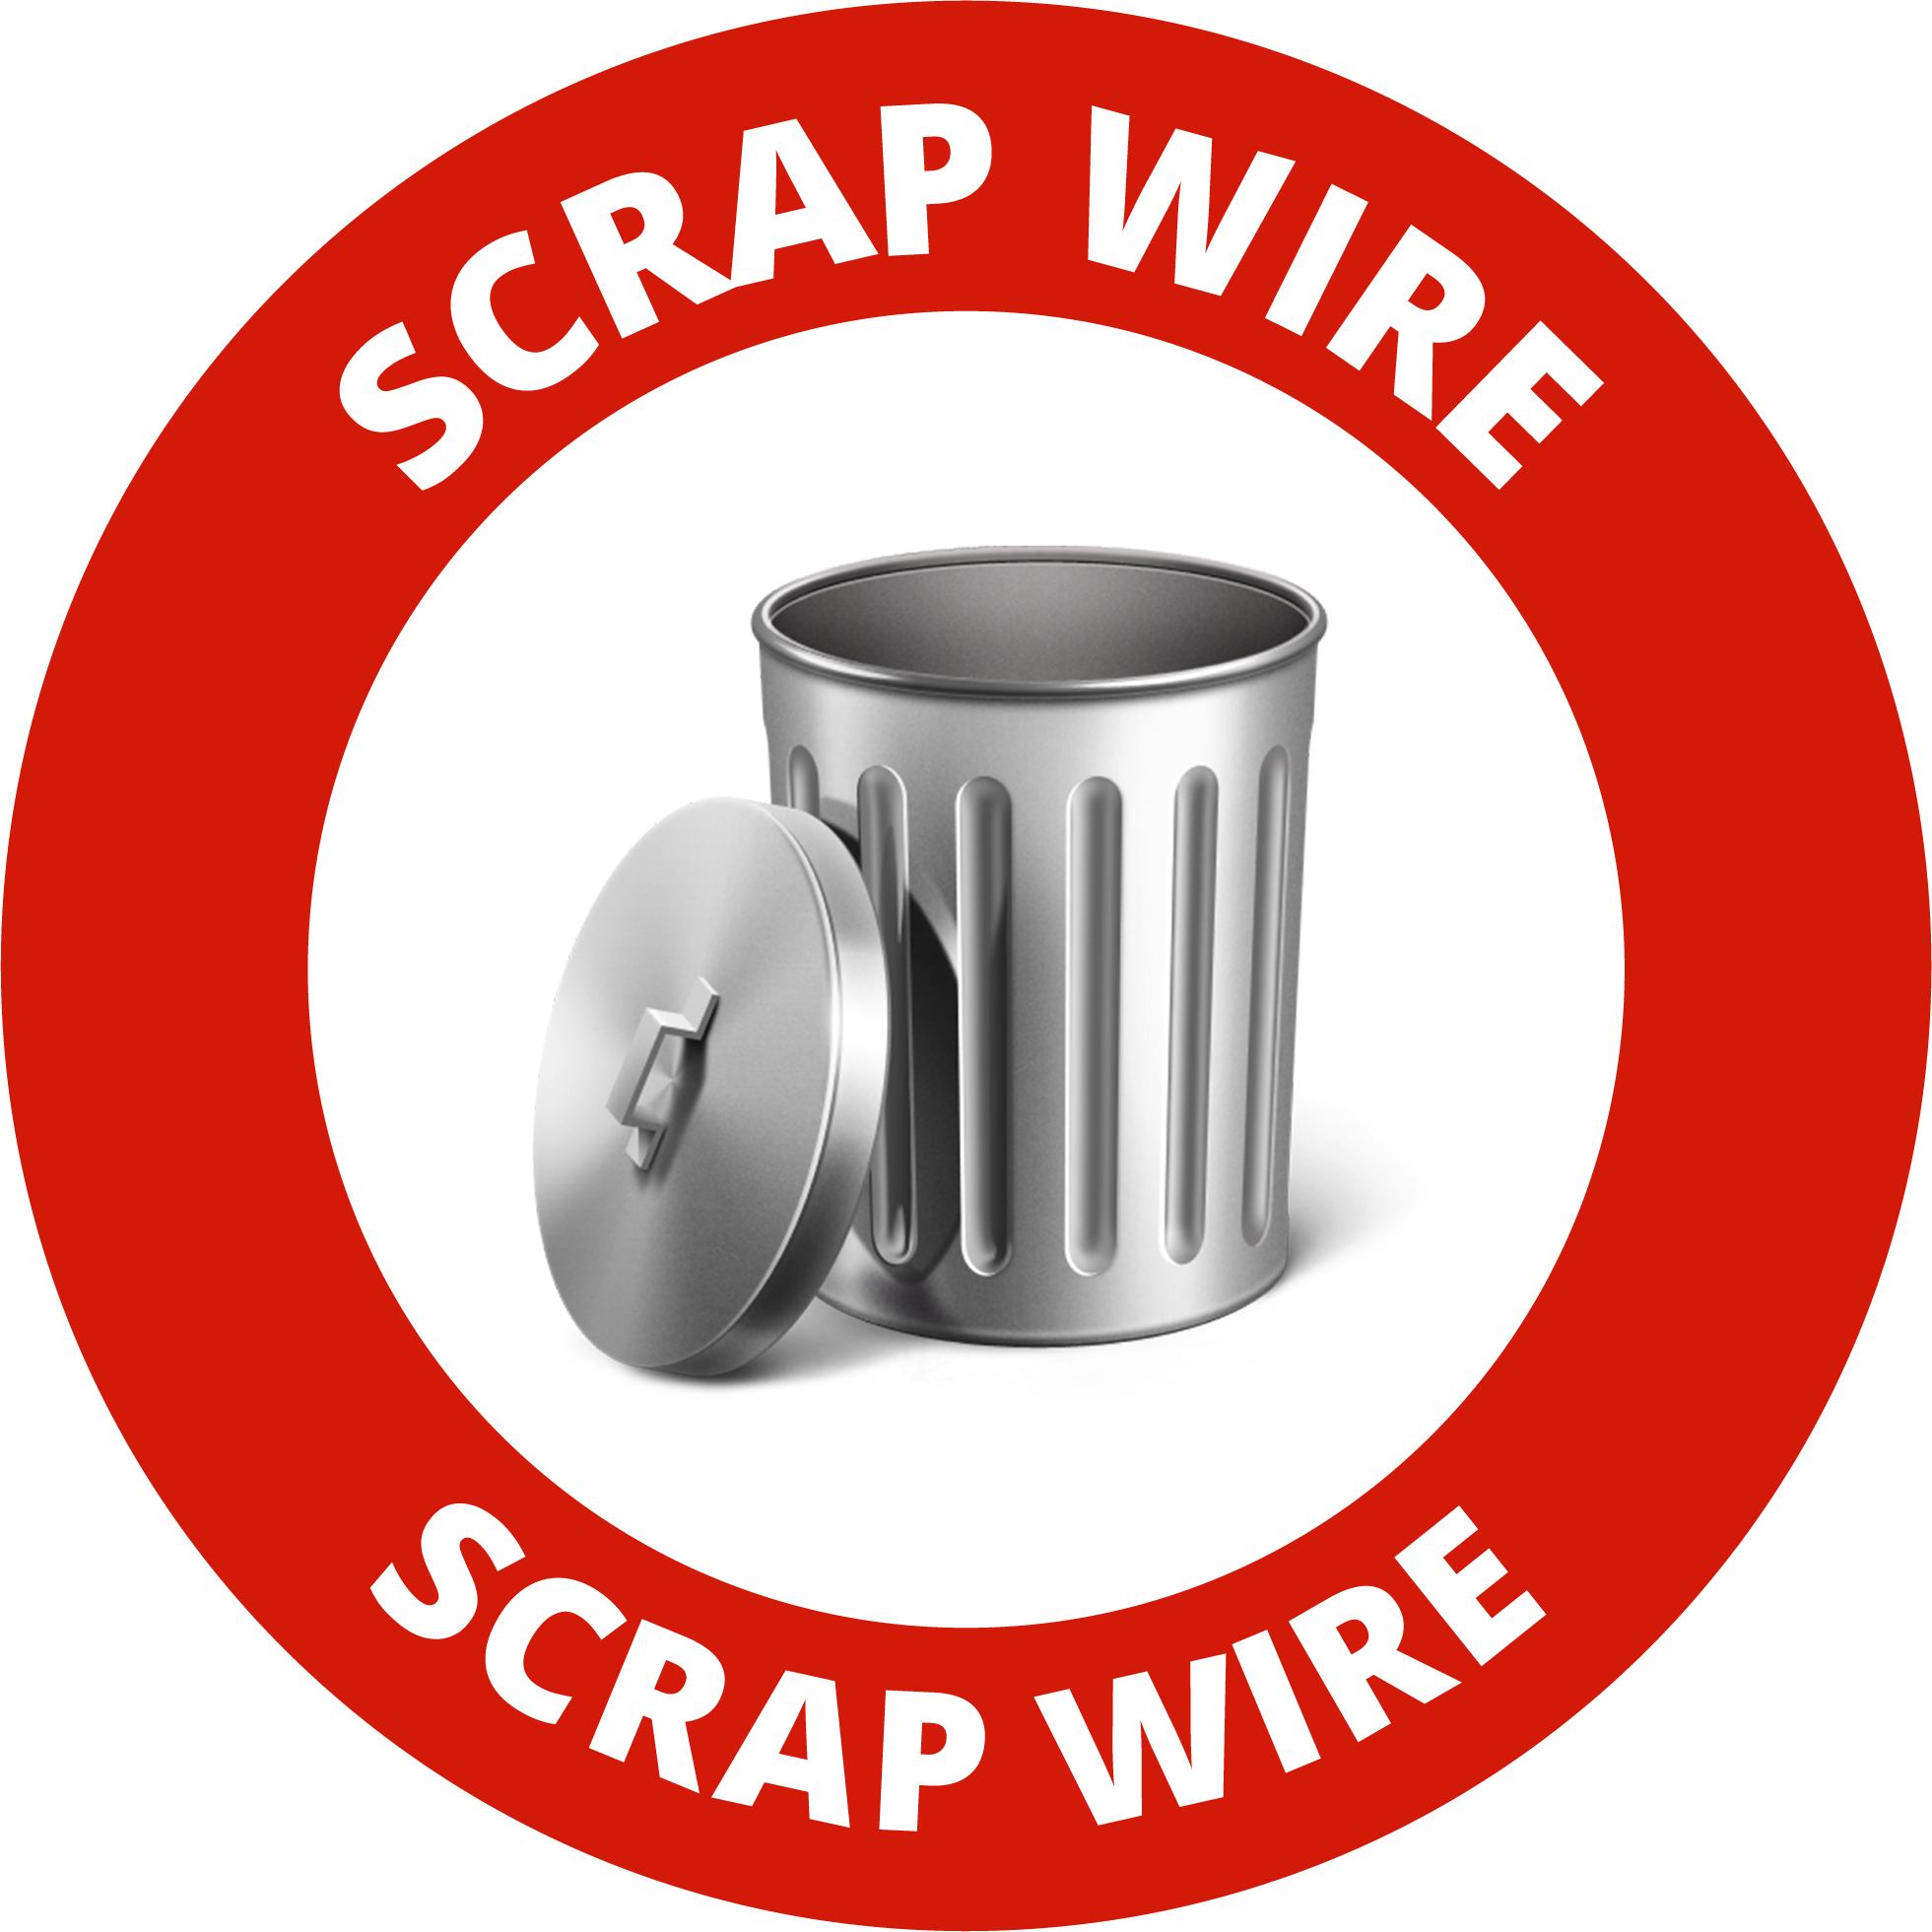 Scrap Wire Mark – Industry Visuals